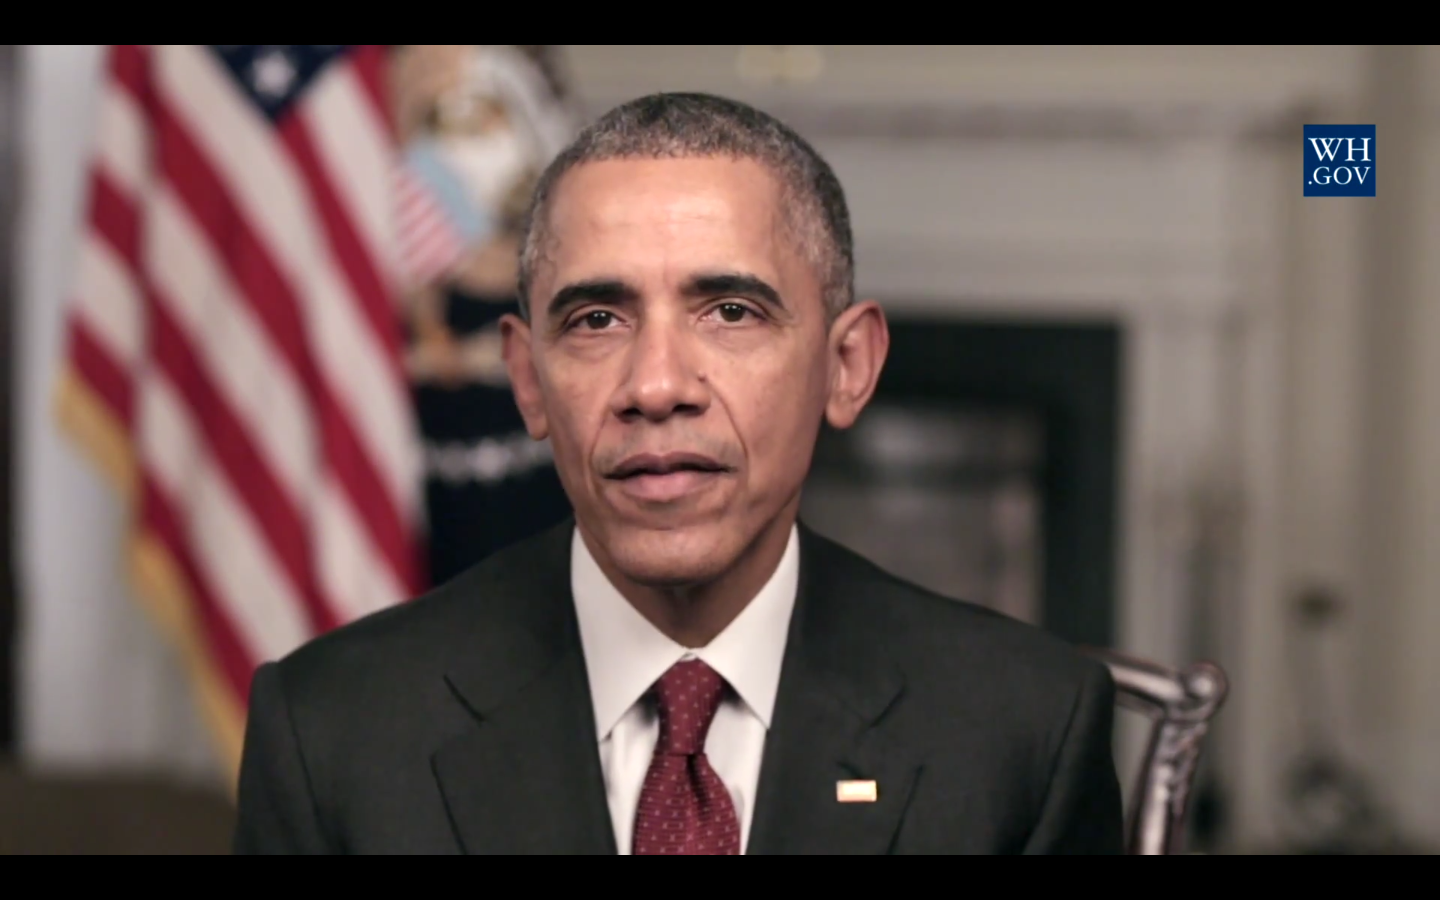 President Obama's weekly address